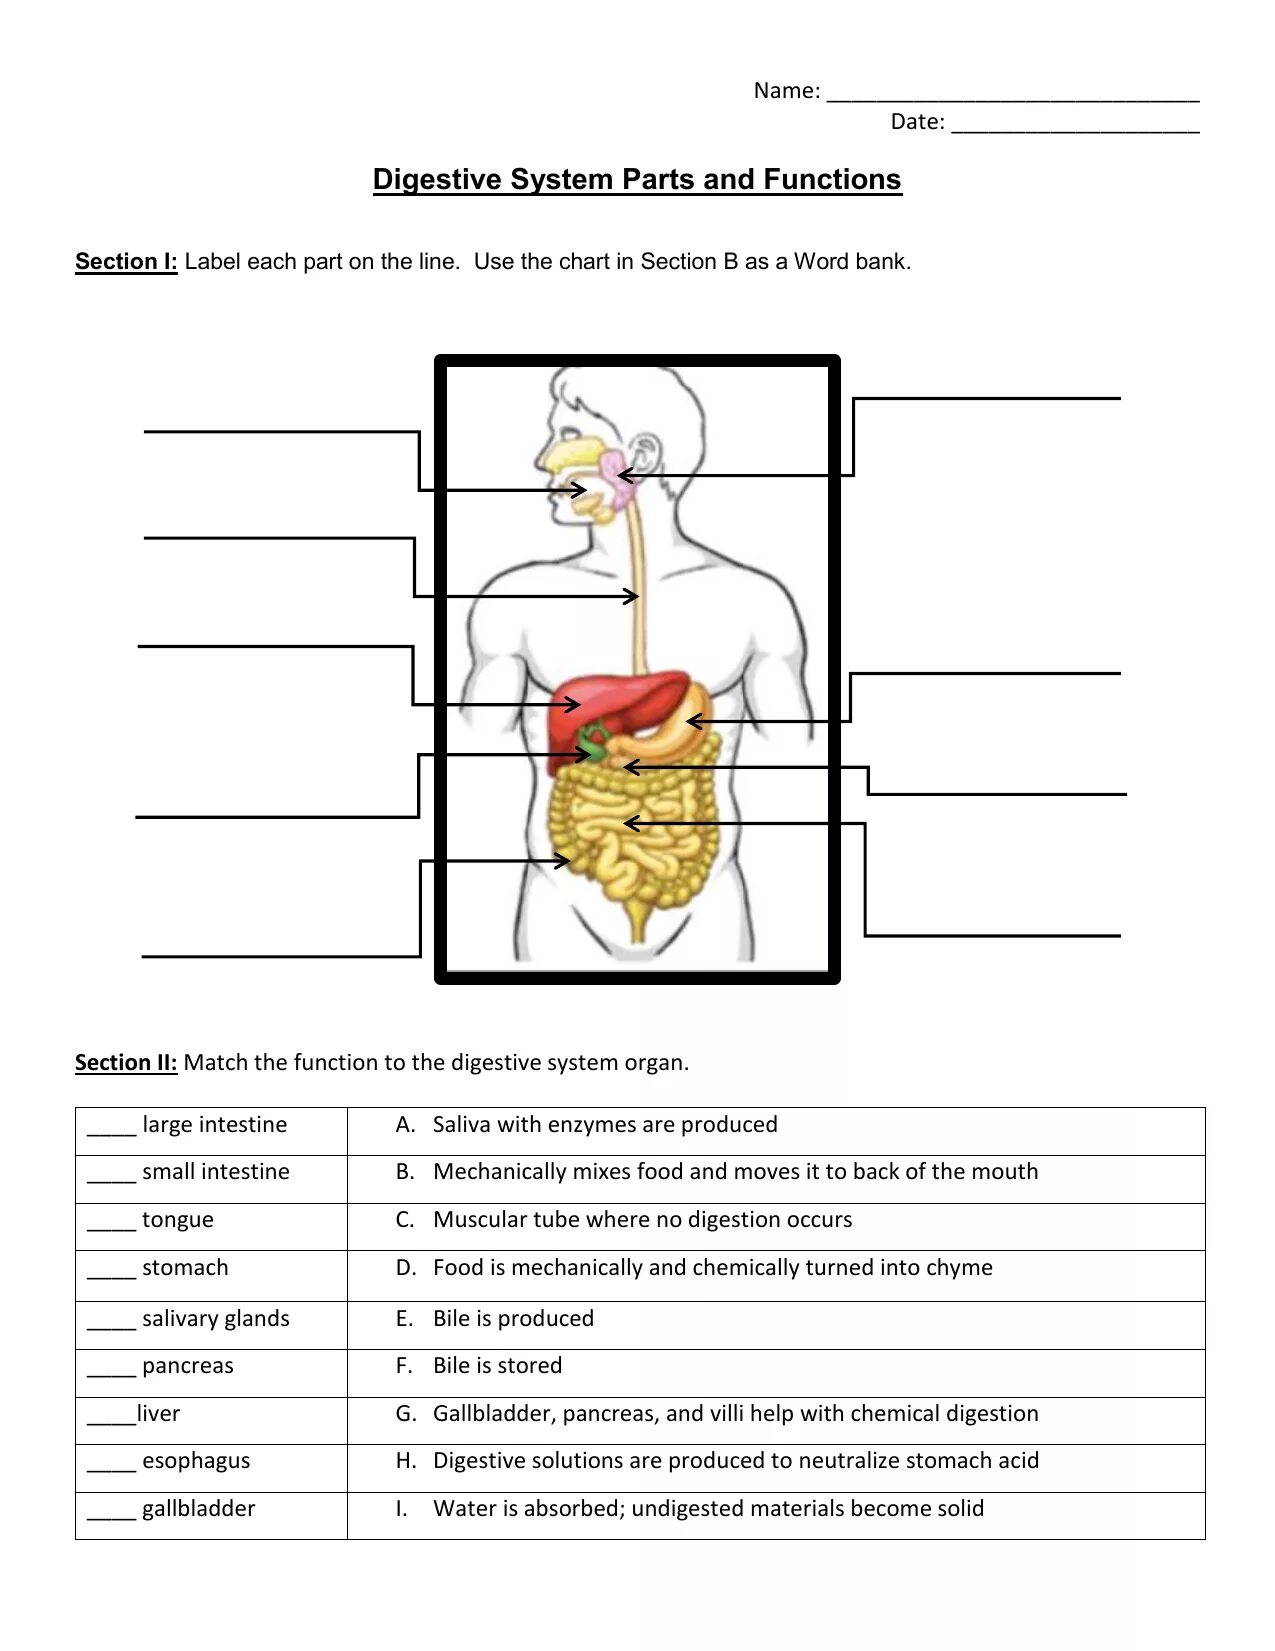 The Human Digestive System Worksheet. Digestive System Worksheet. Digestive System functions. Пищеварительная система рабочий лист. Упражнения пищеварительная система